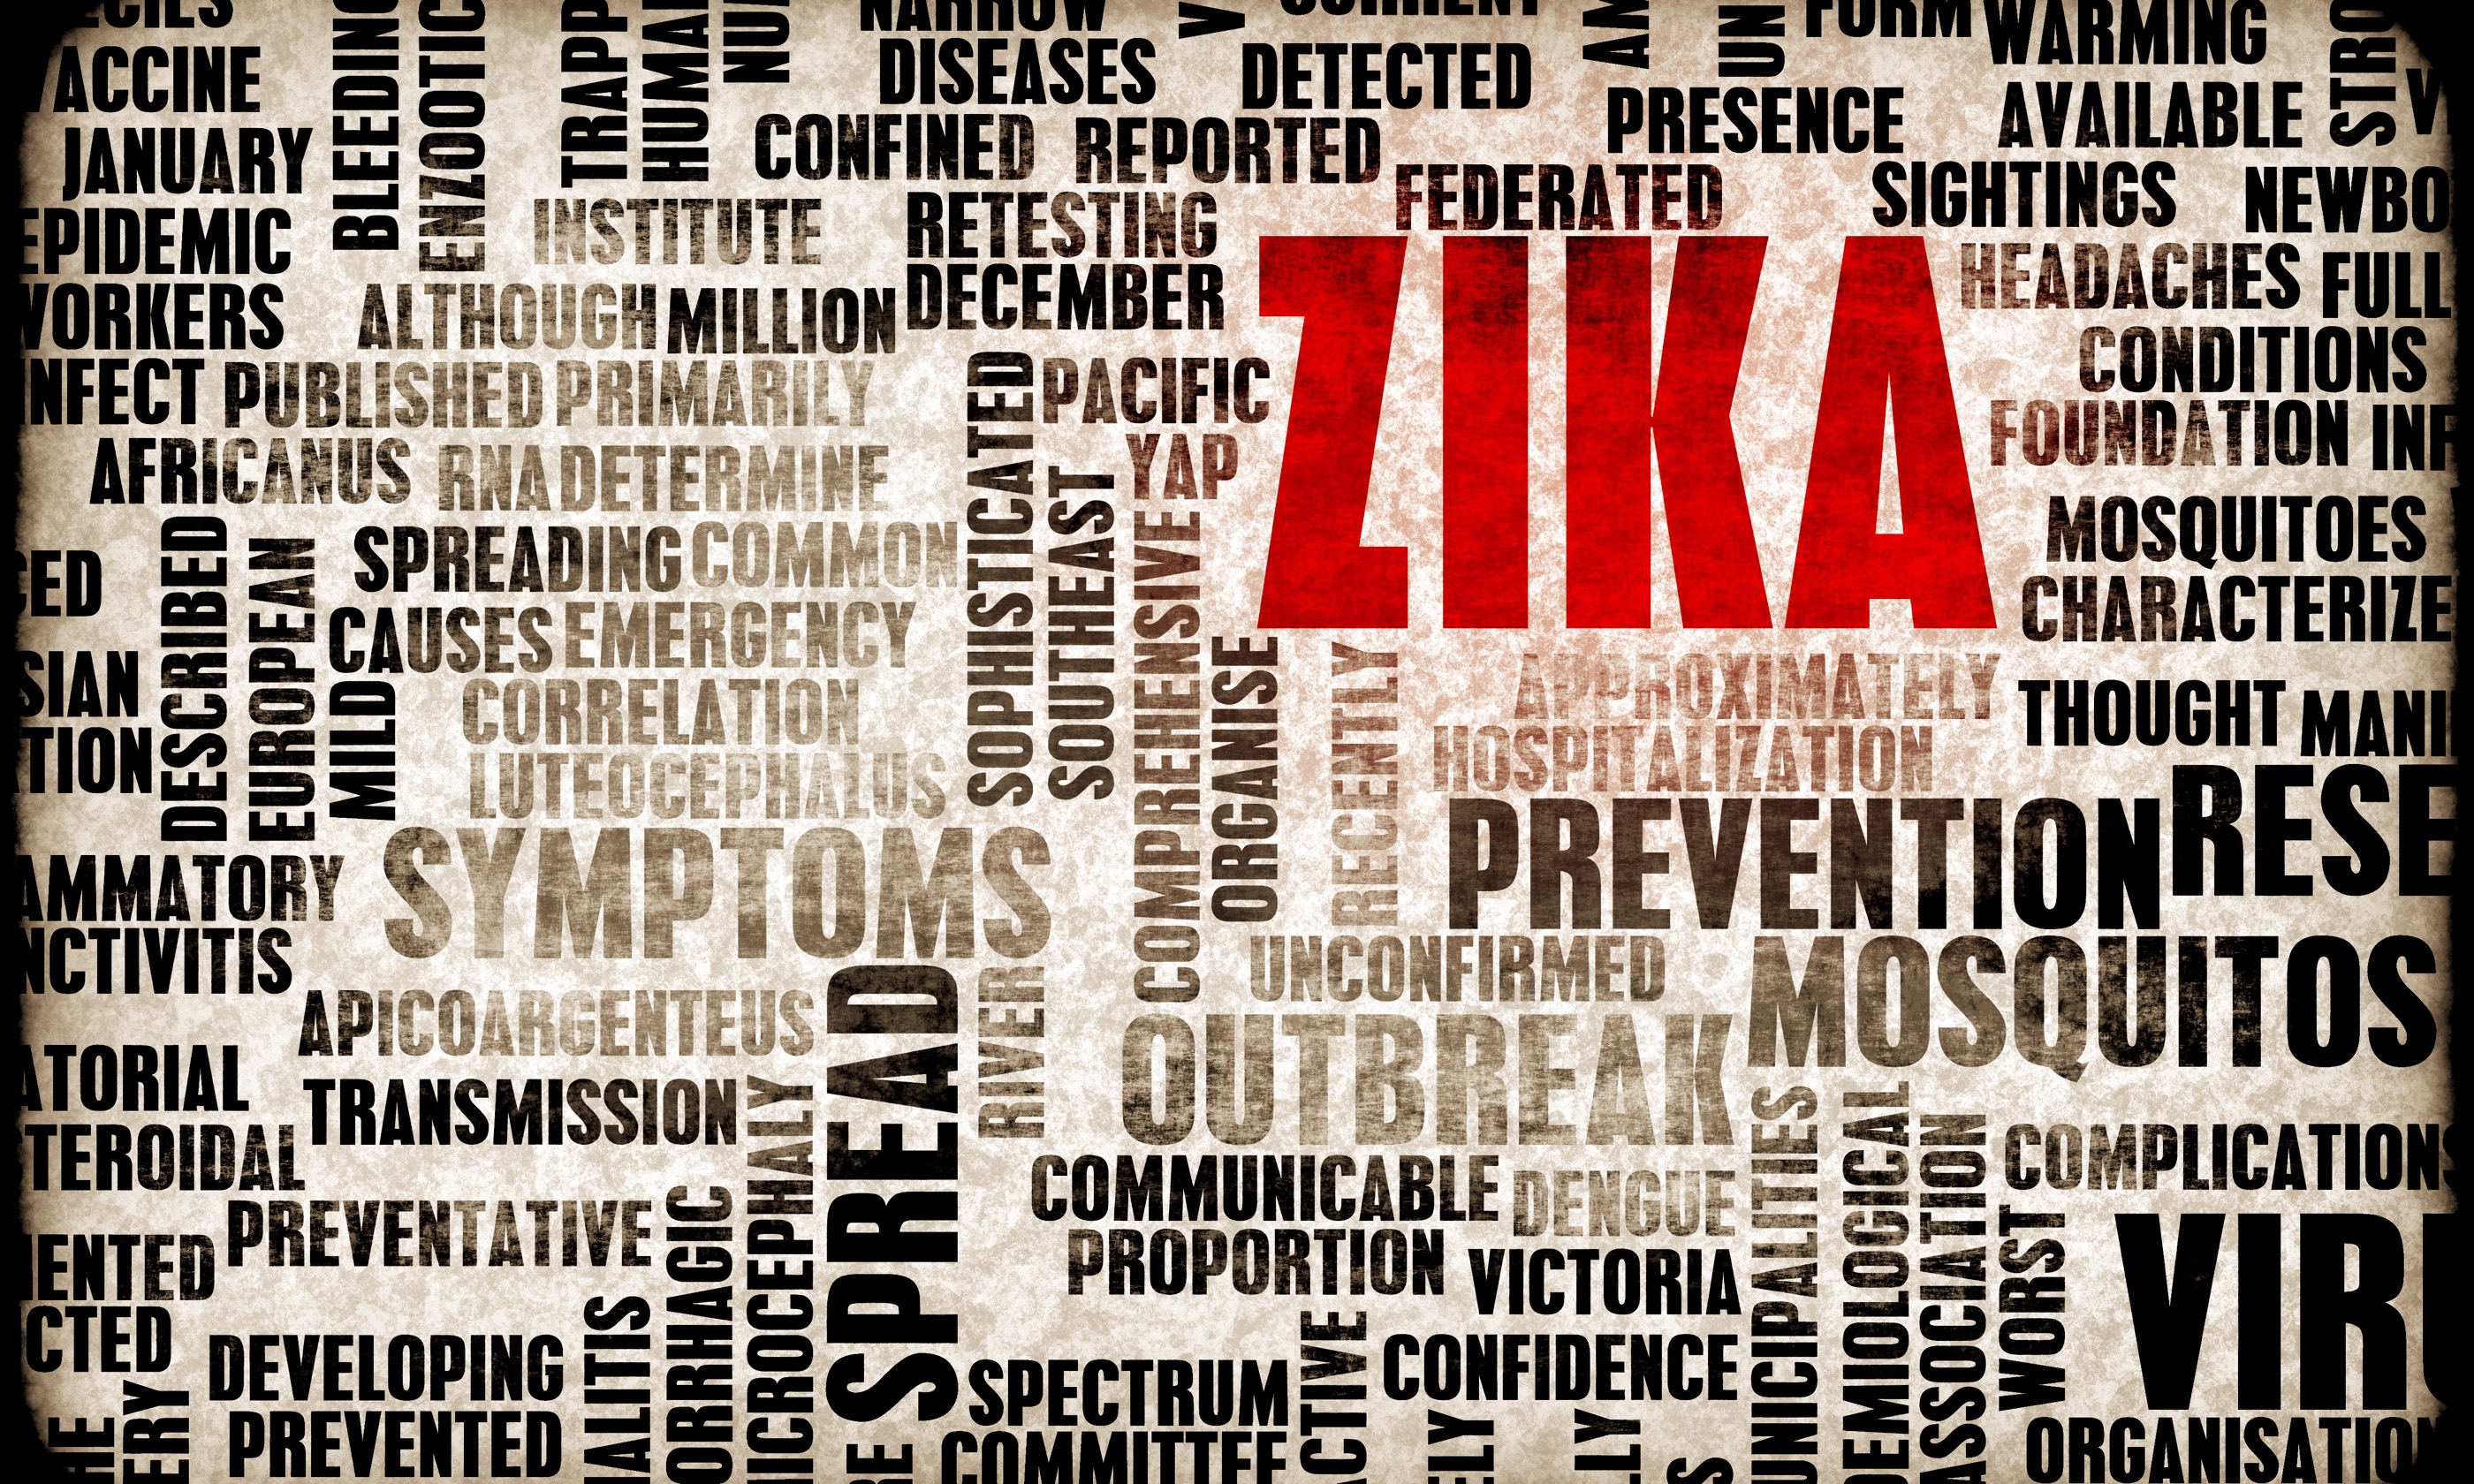 Zika sign (Shutterstock.com. See main credit below)